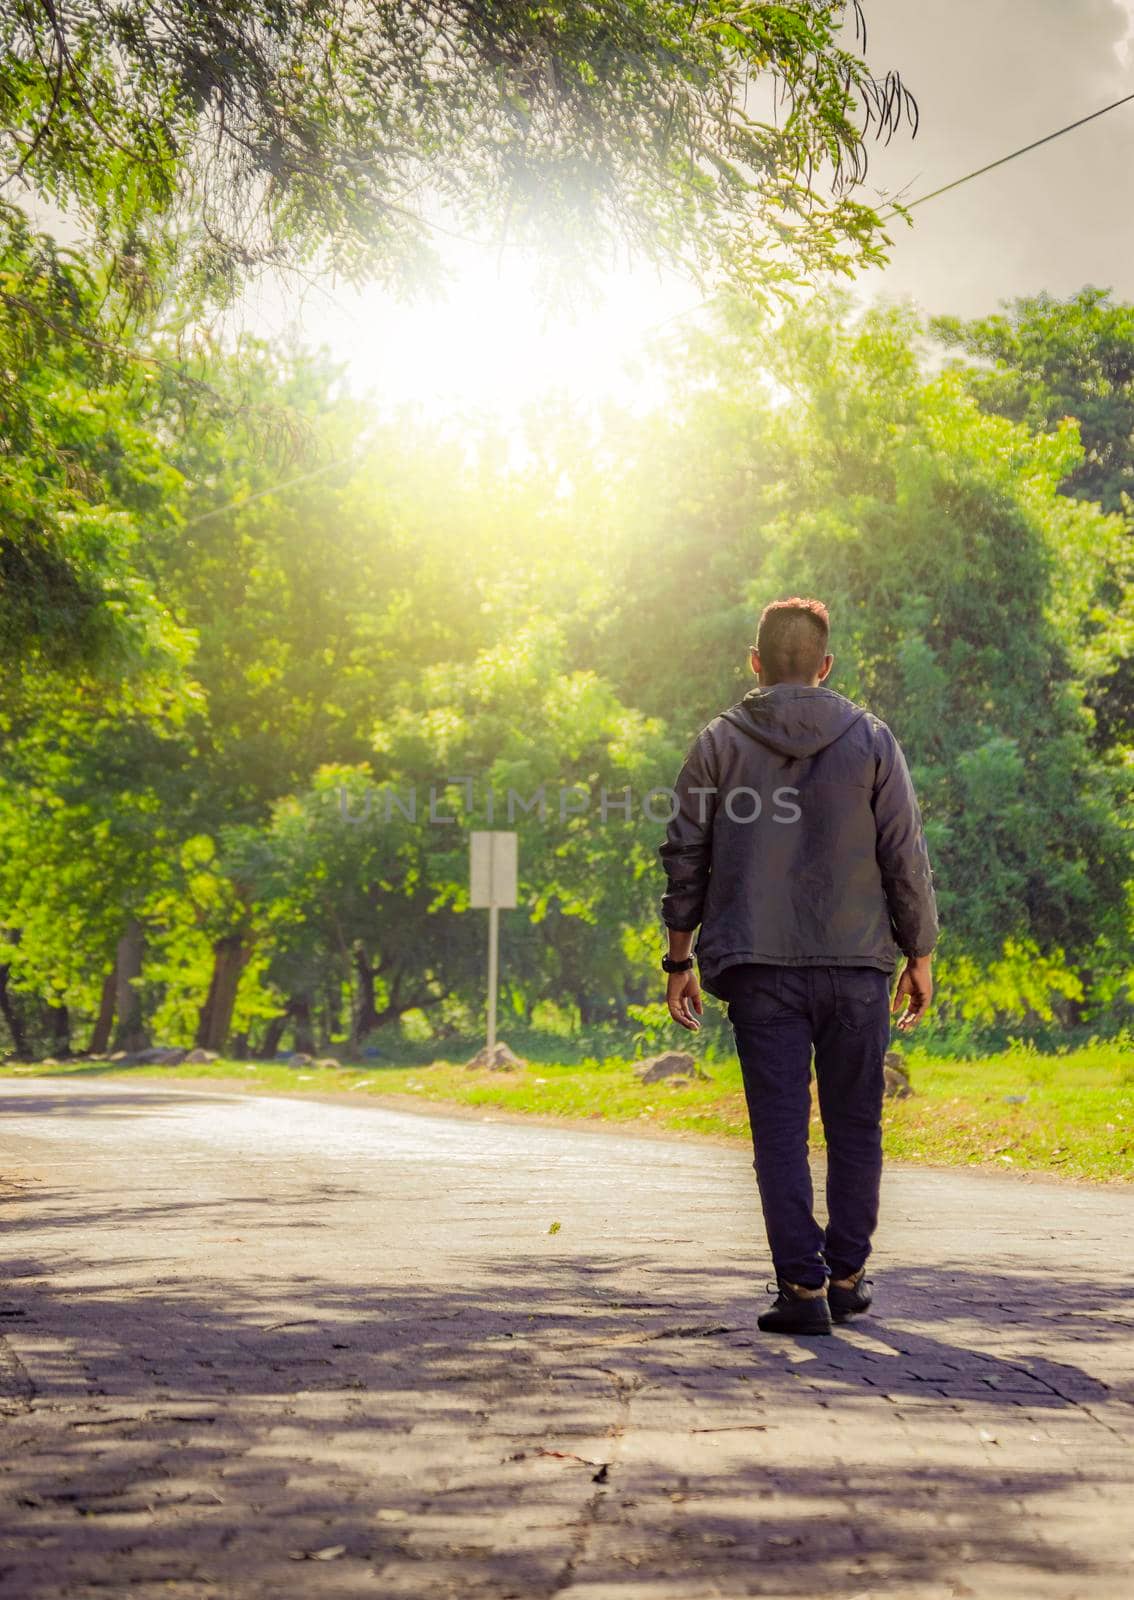 Man walking in desolate street, man walking backwards walking in a street surrounded by trees by isaiphoto